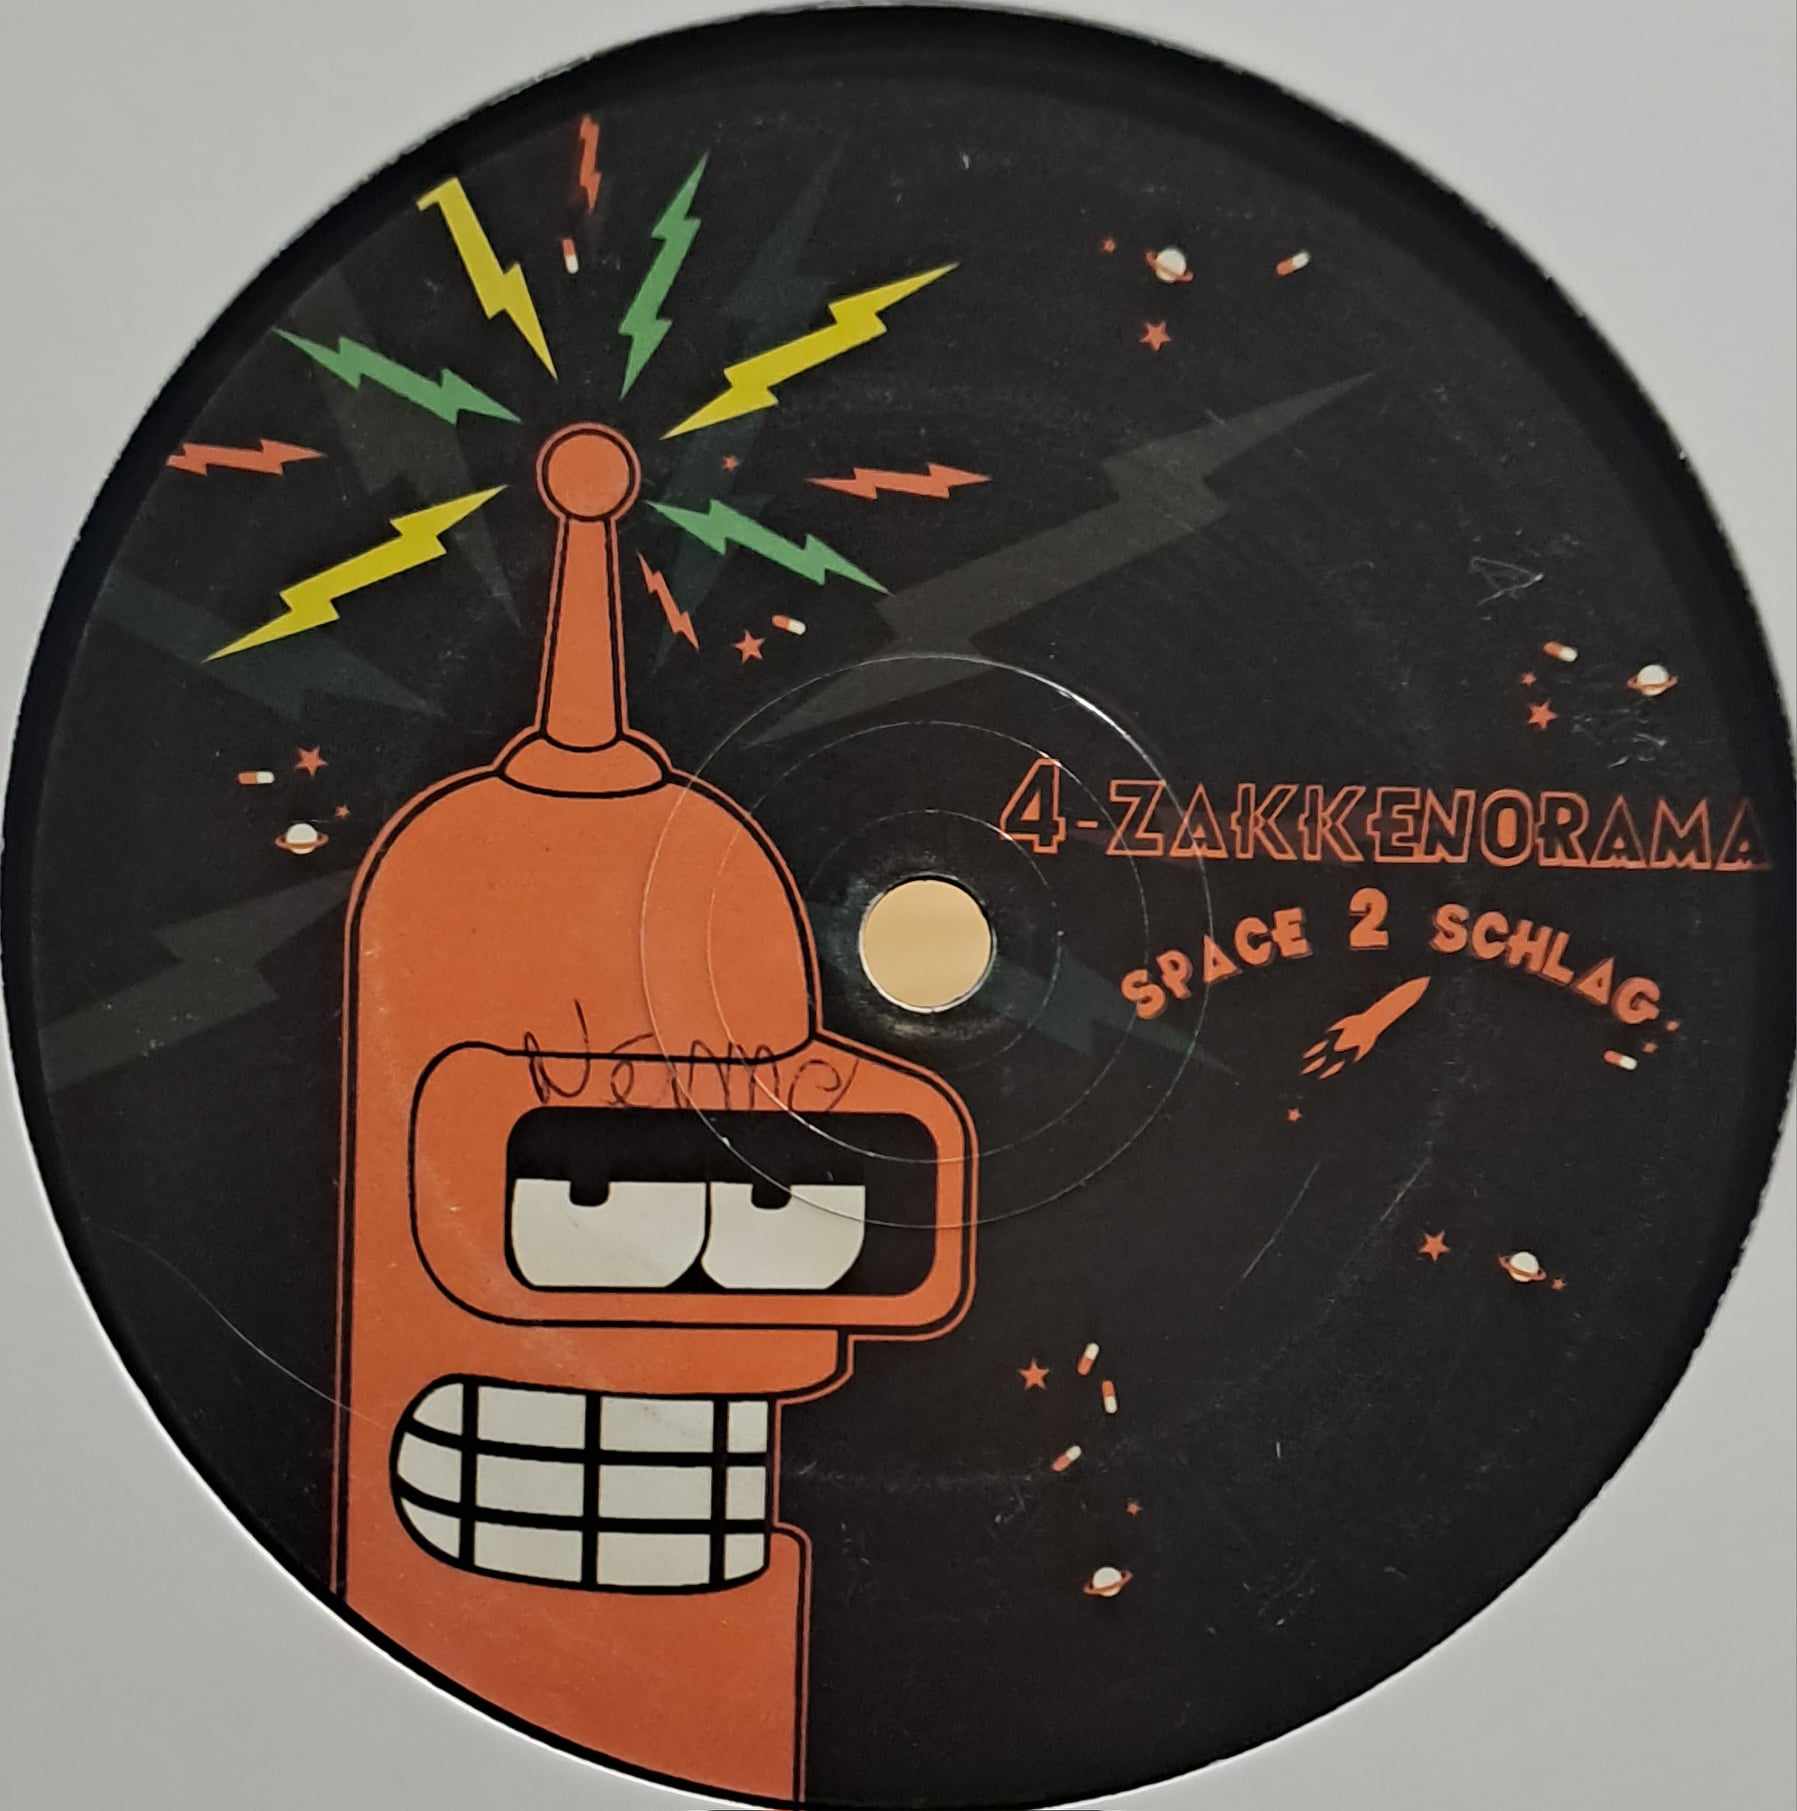 Space 2 Schlag 02 - vinyle tribecore